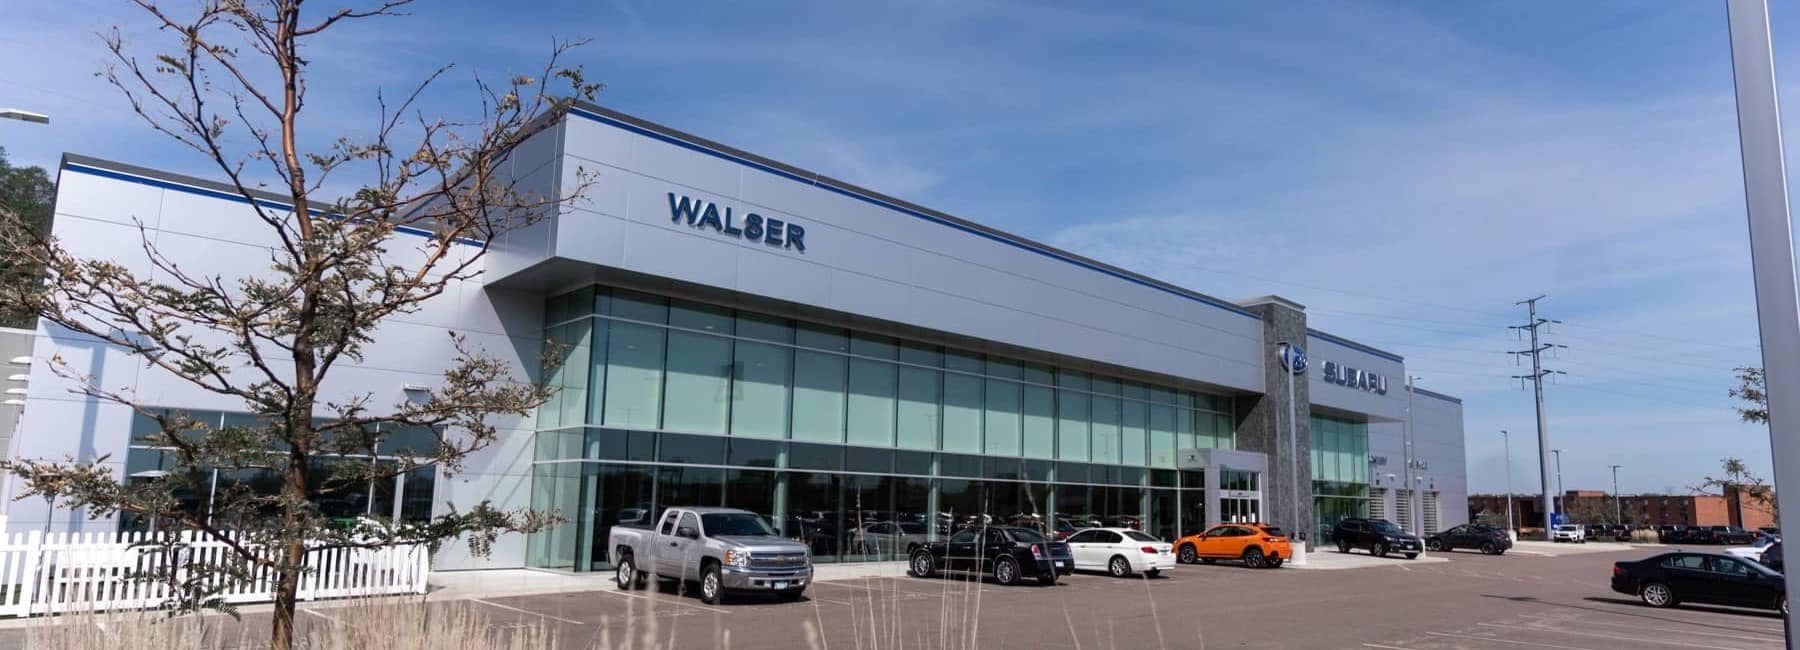 About Walser Subaru St. Paul